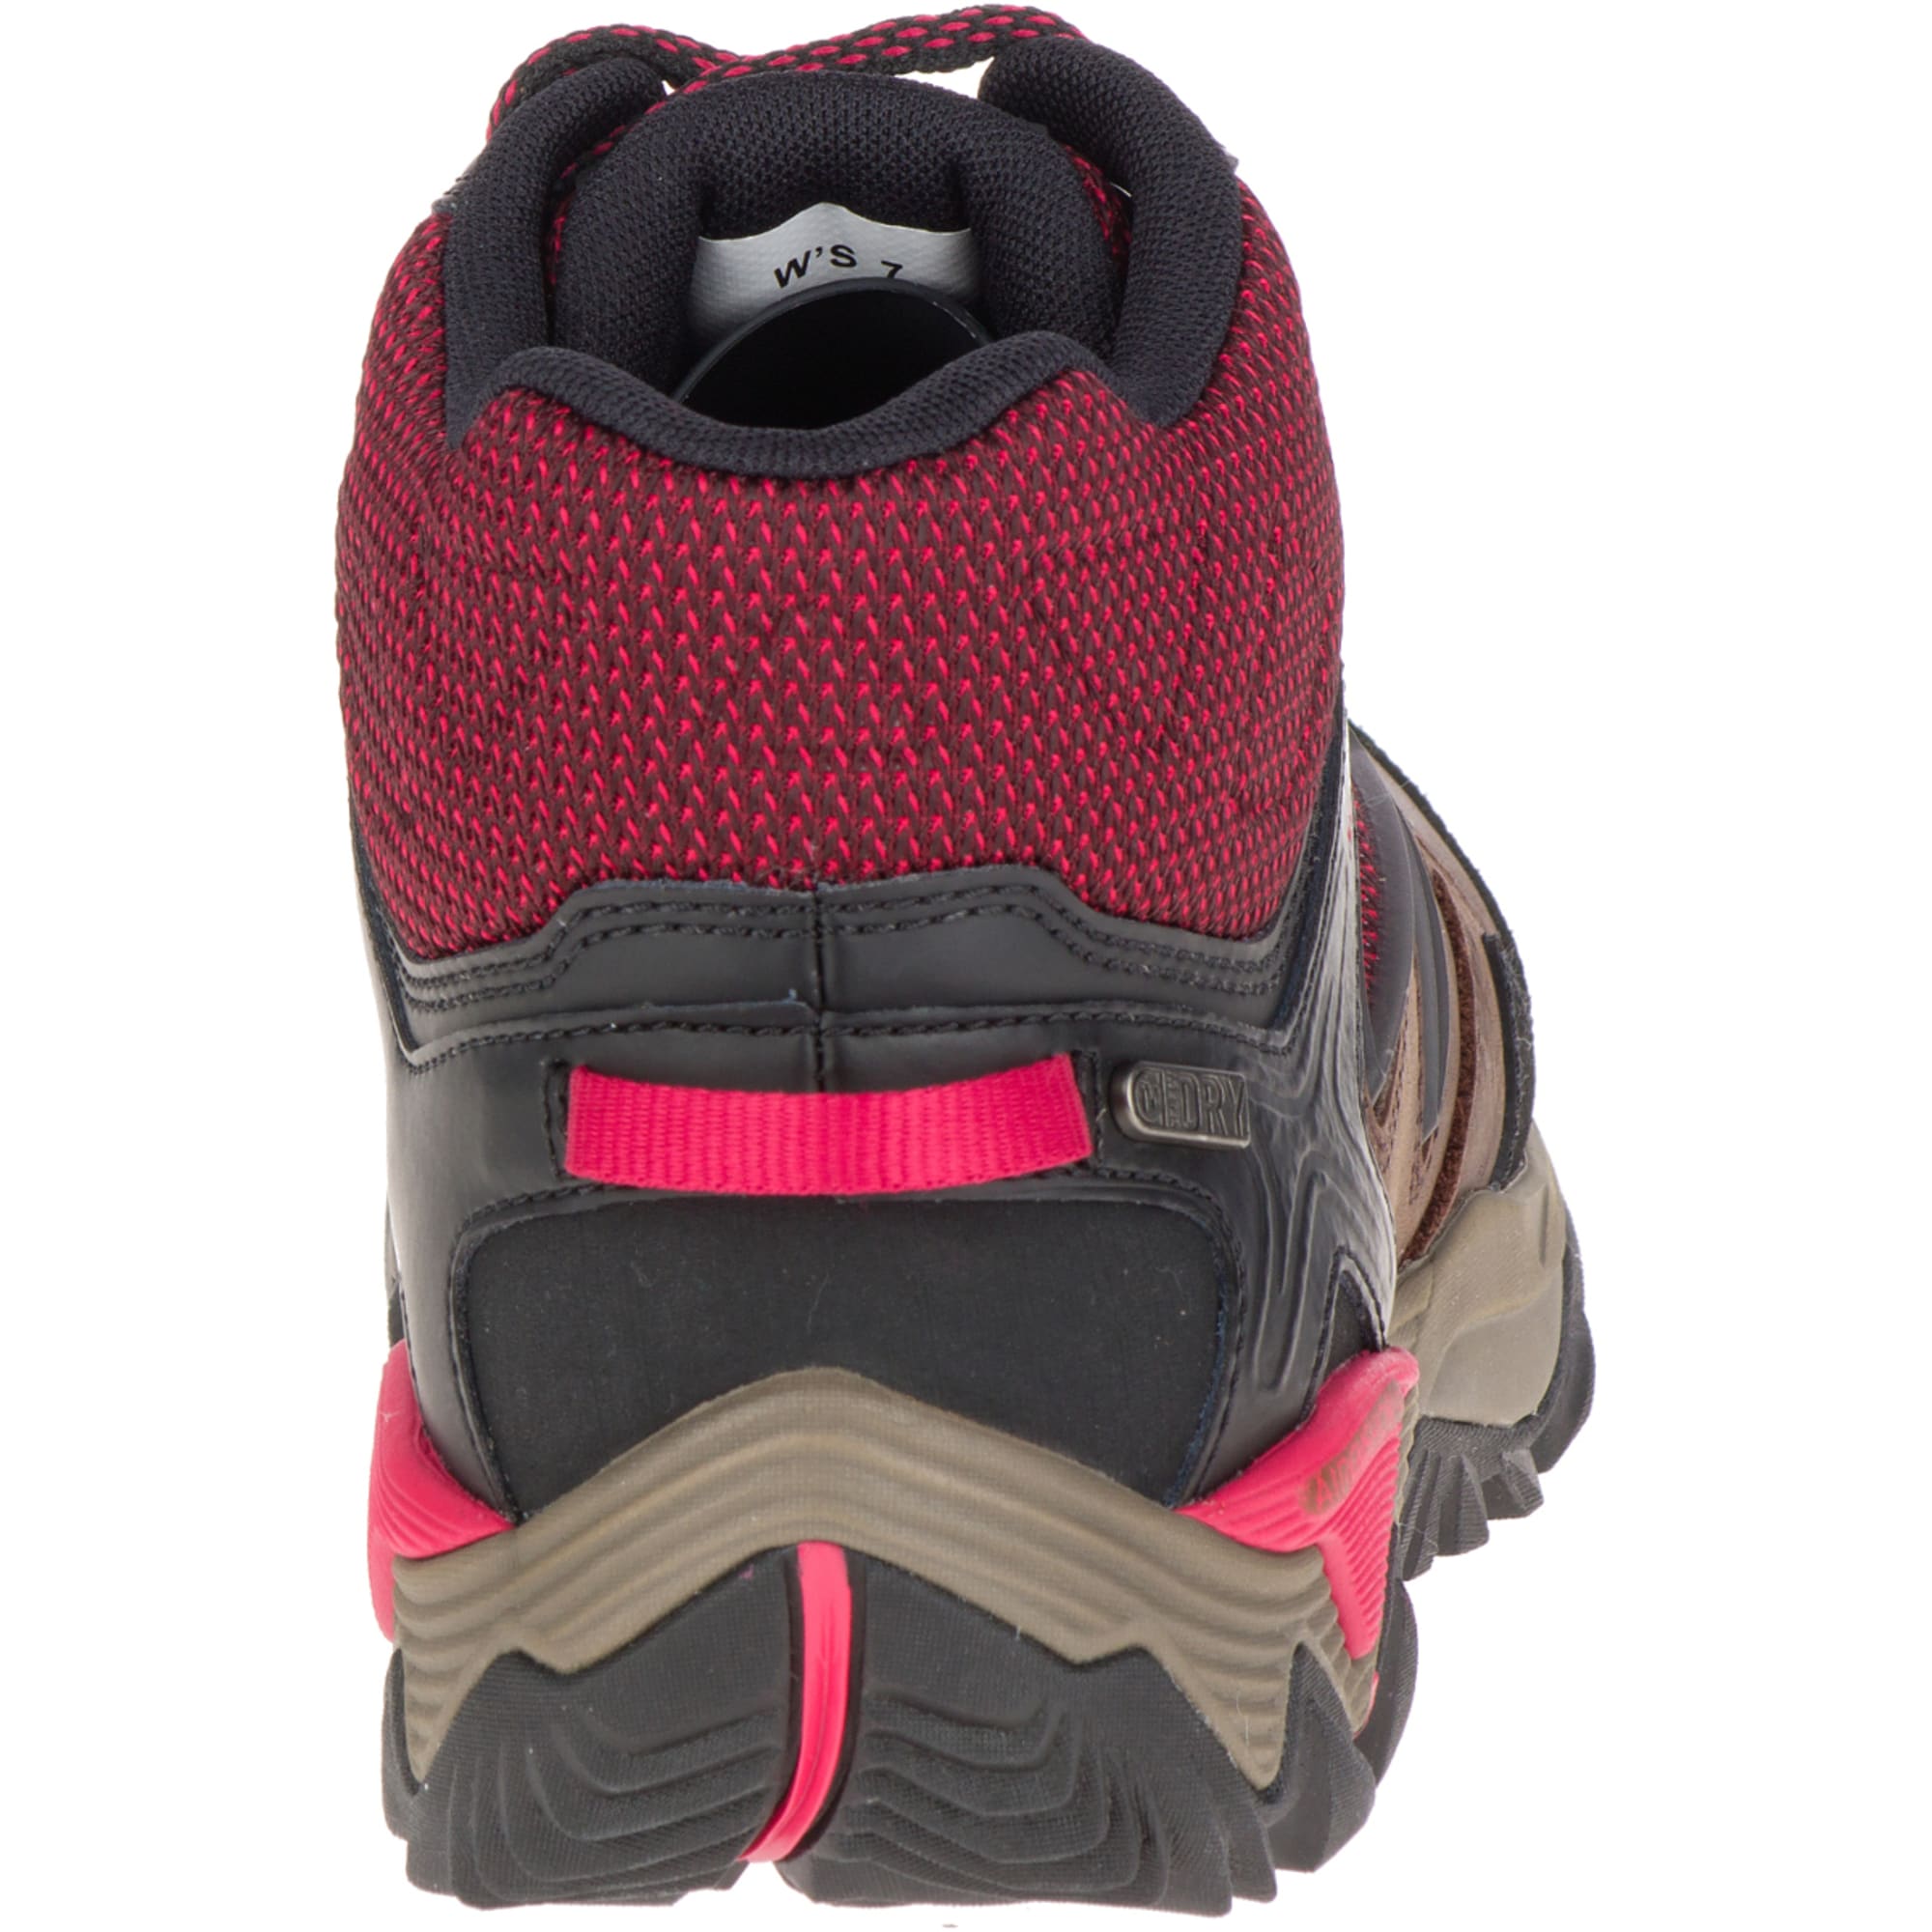 MERRELL Women's All Out Blaze 2 Mid Waterproof Hiking Boots, Cinnamon -  Eastern Mountain Sports